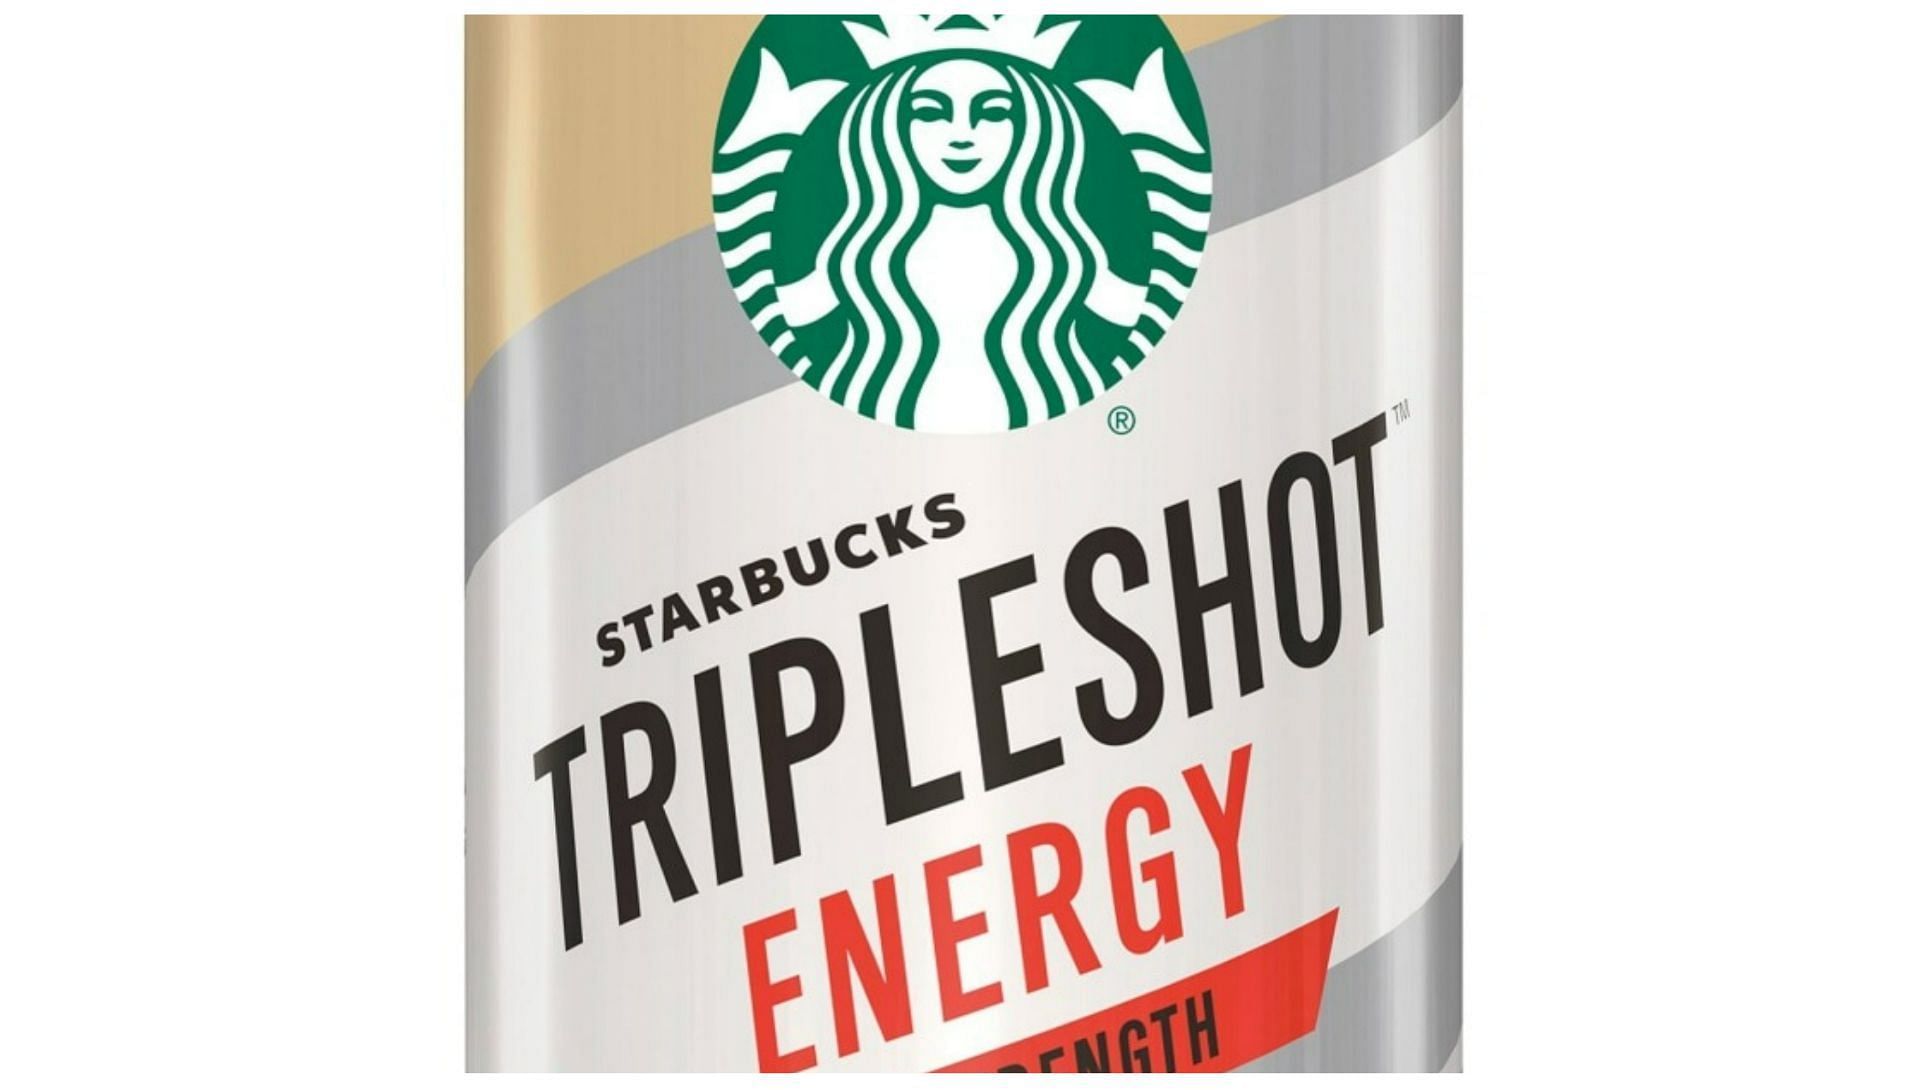 Coffee-chain recalls popular drink (Image via Starbucks)